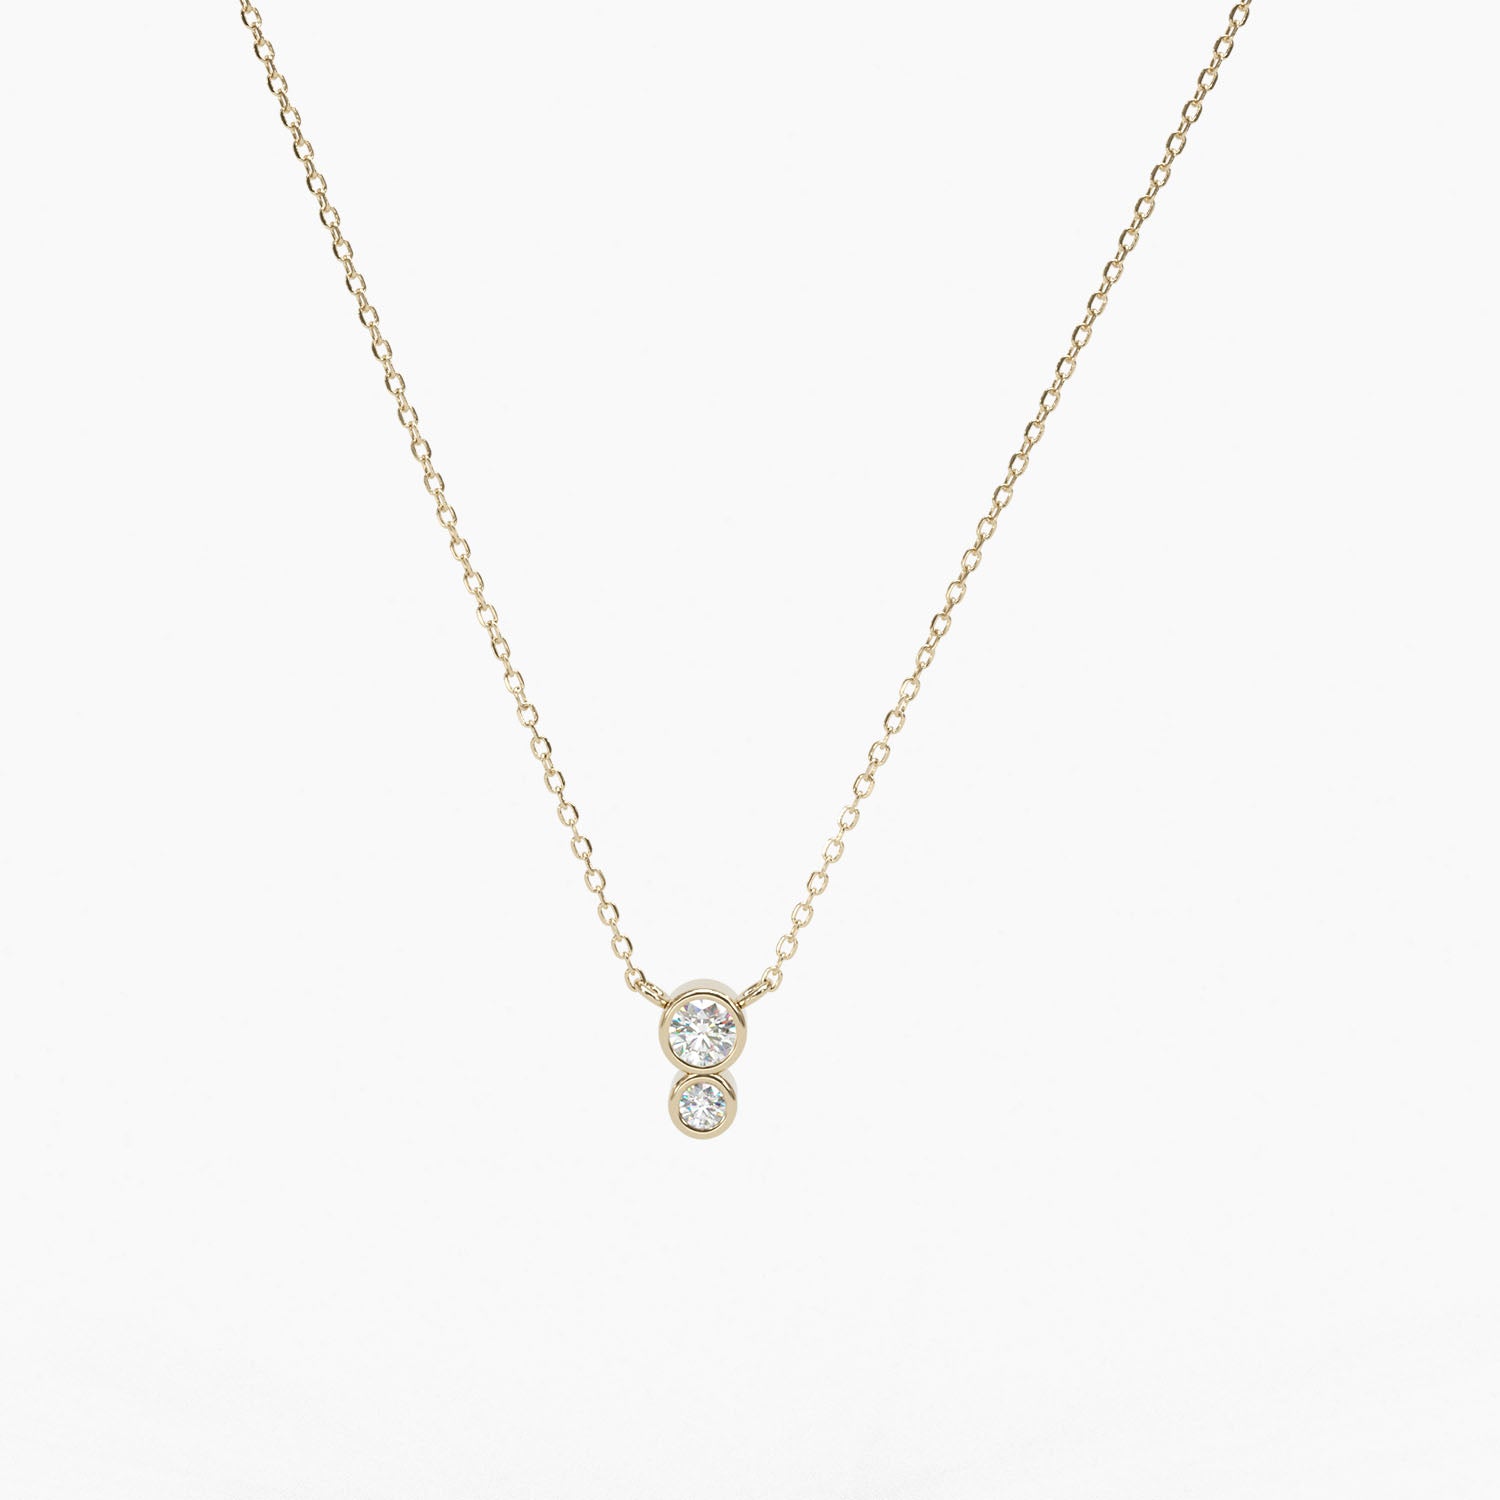 Two Bezel Diamond Necklace